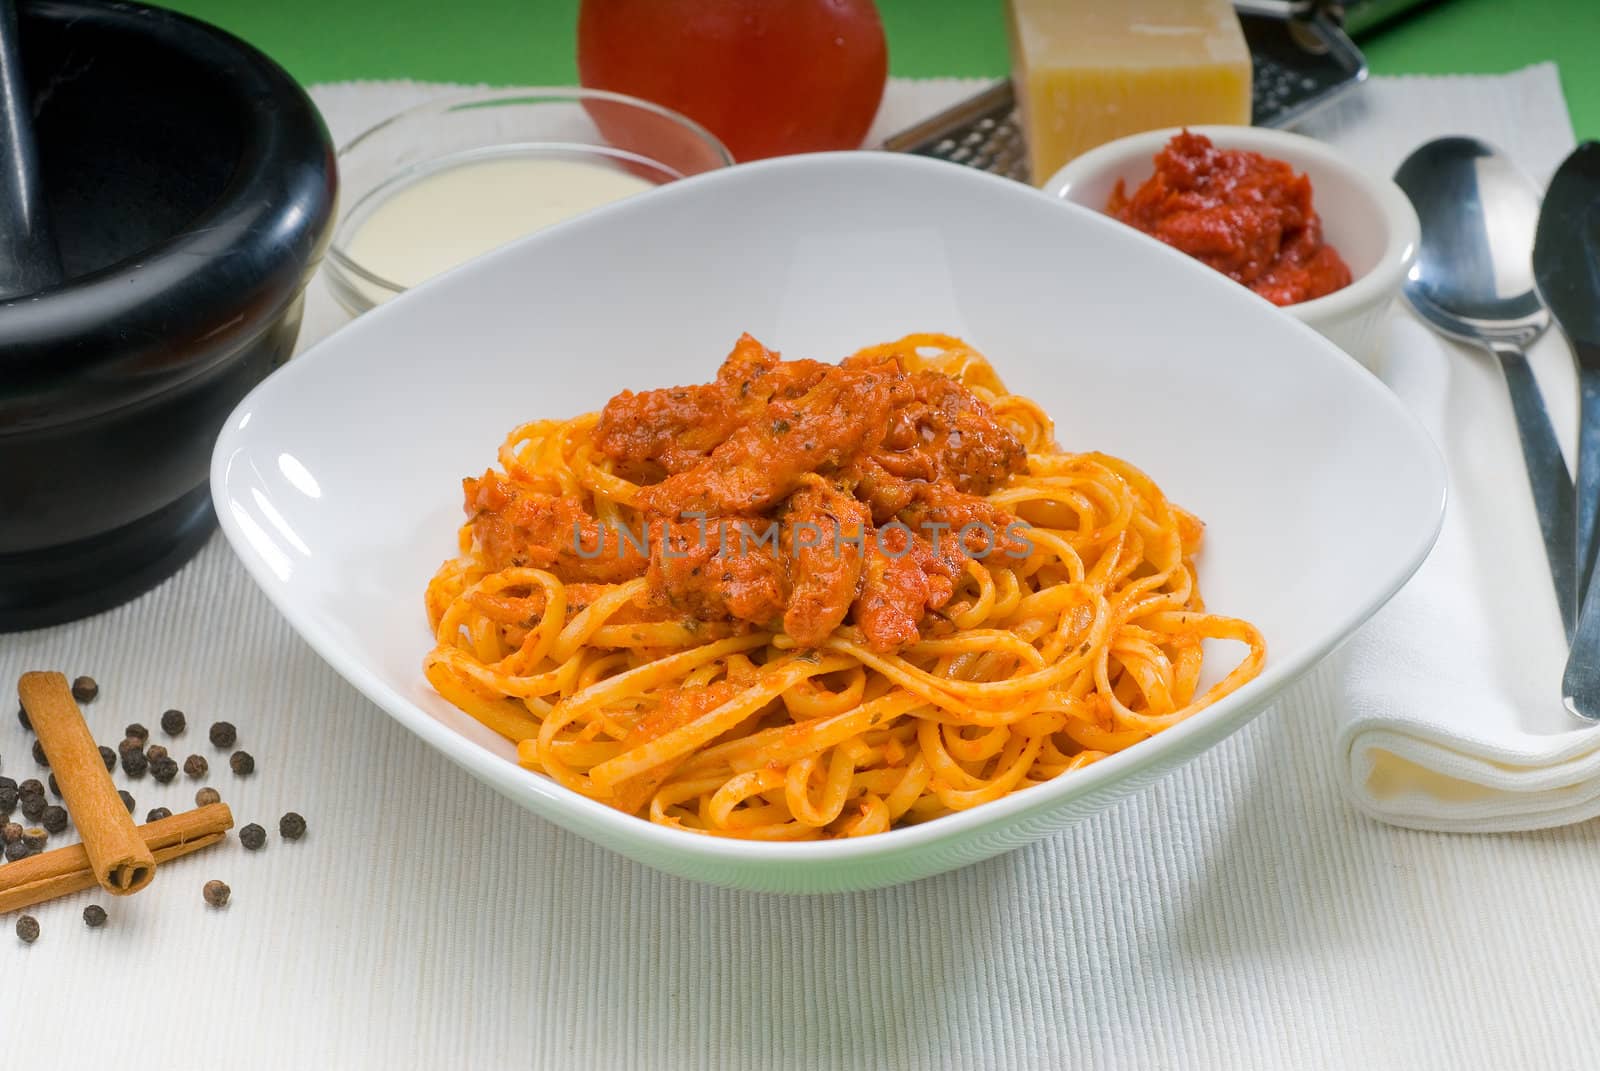 tomato and chicken pasta by keko64